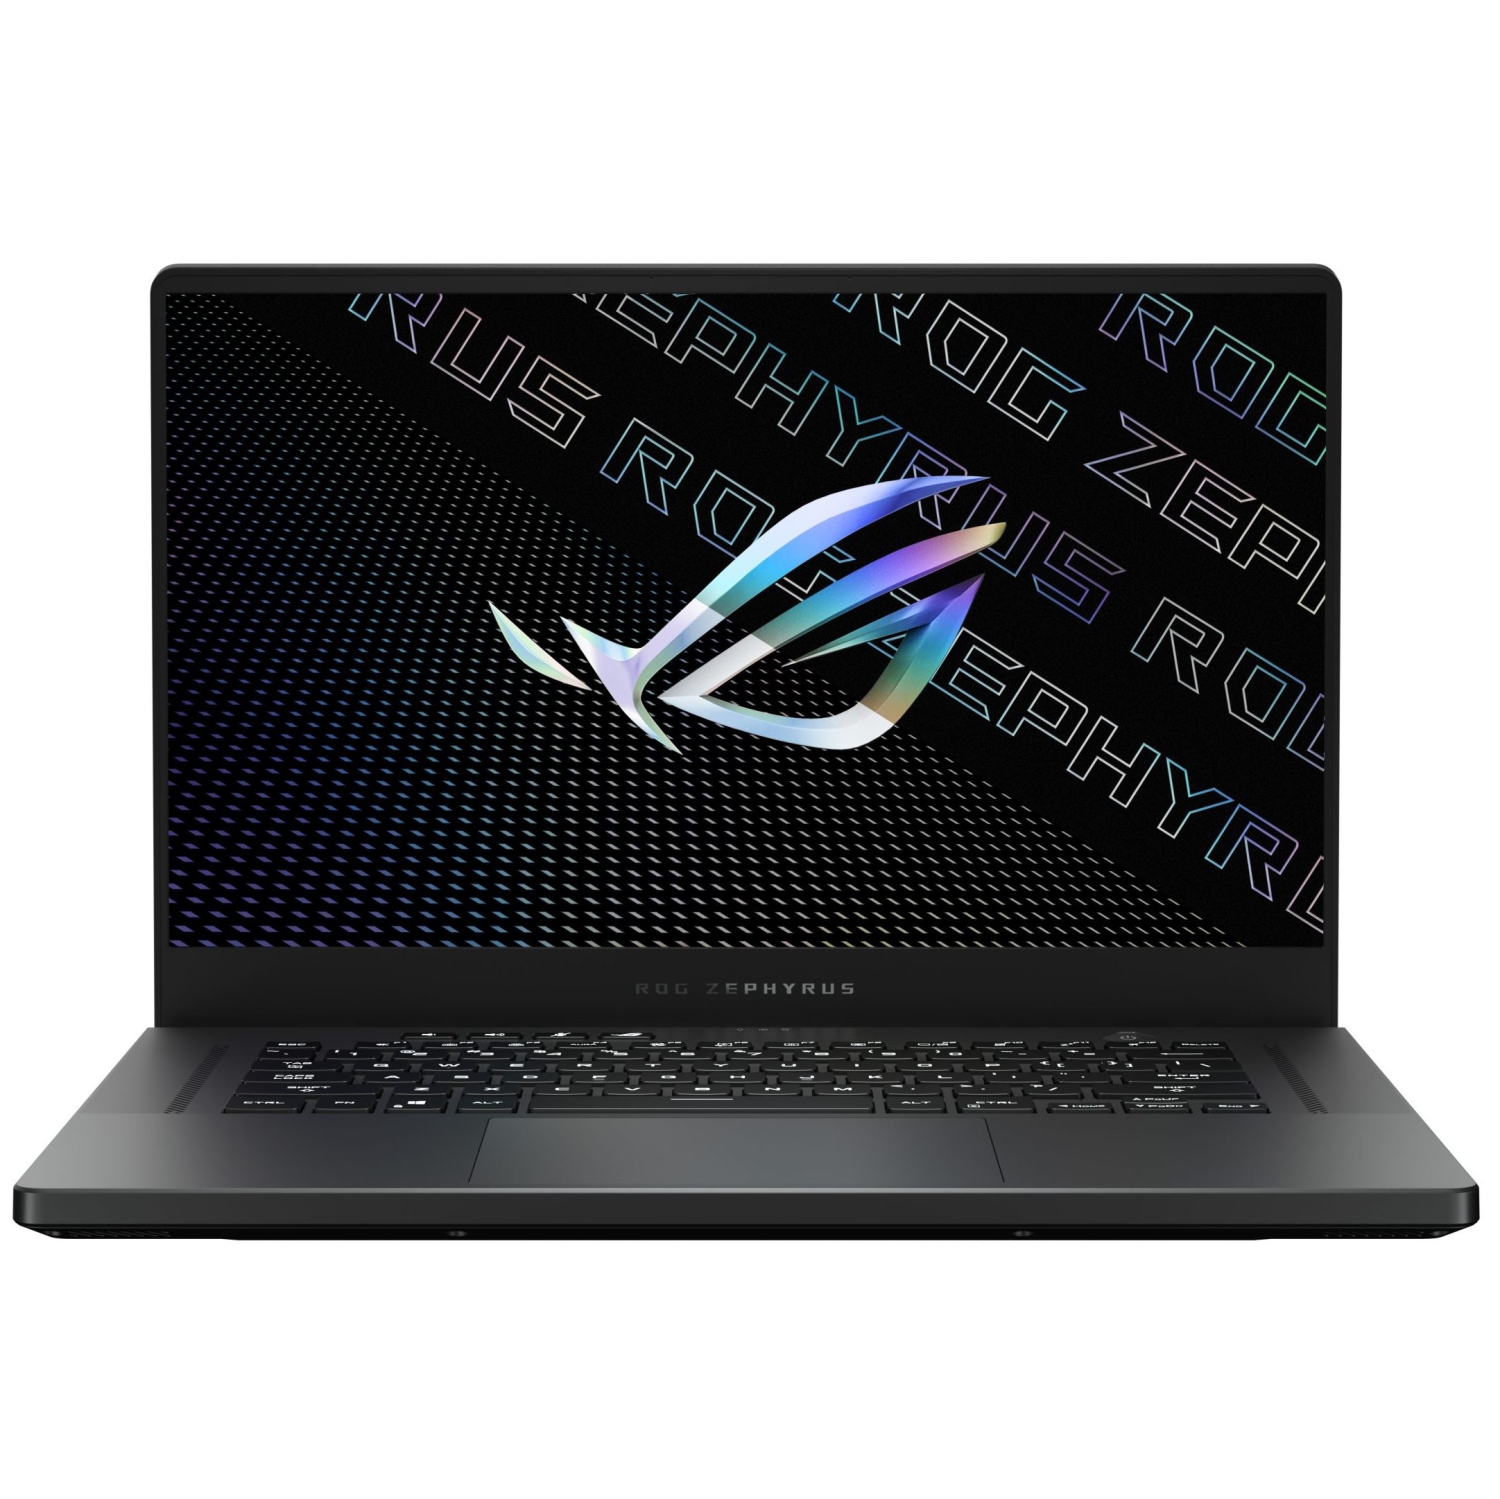 Custom ASUS ROG Zephyrus G15 Laptop (AMD Ryzen 9 5900HS, 16GB RAM, 1TB SSD, NVIDIA RTX 3070, Win 10 Home)